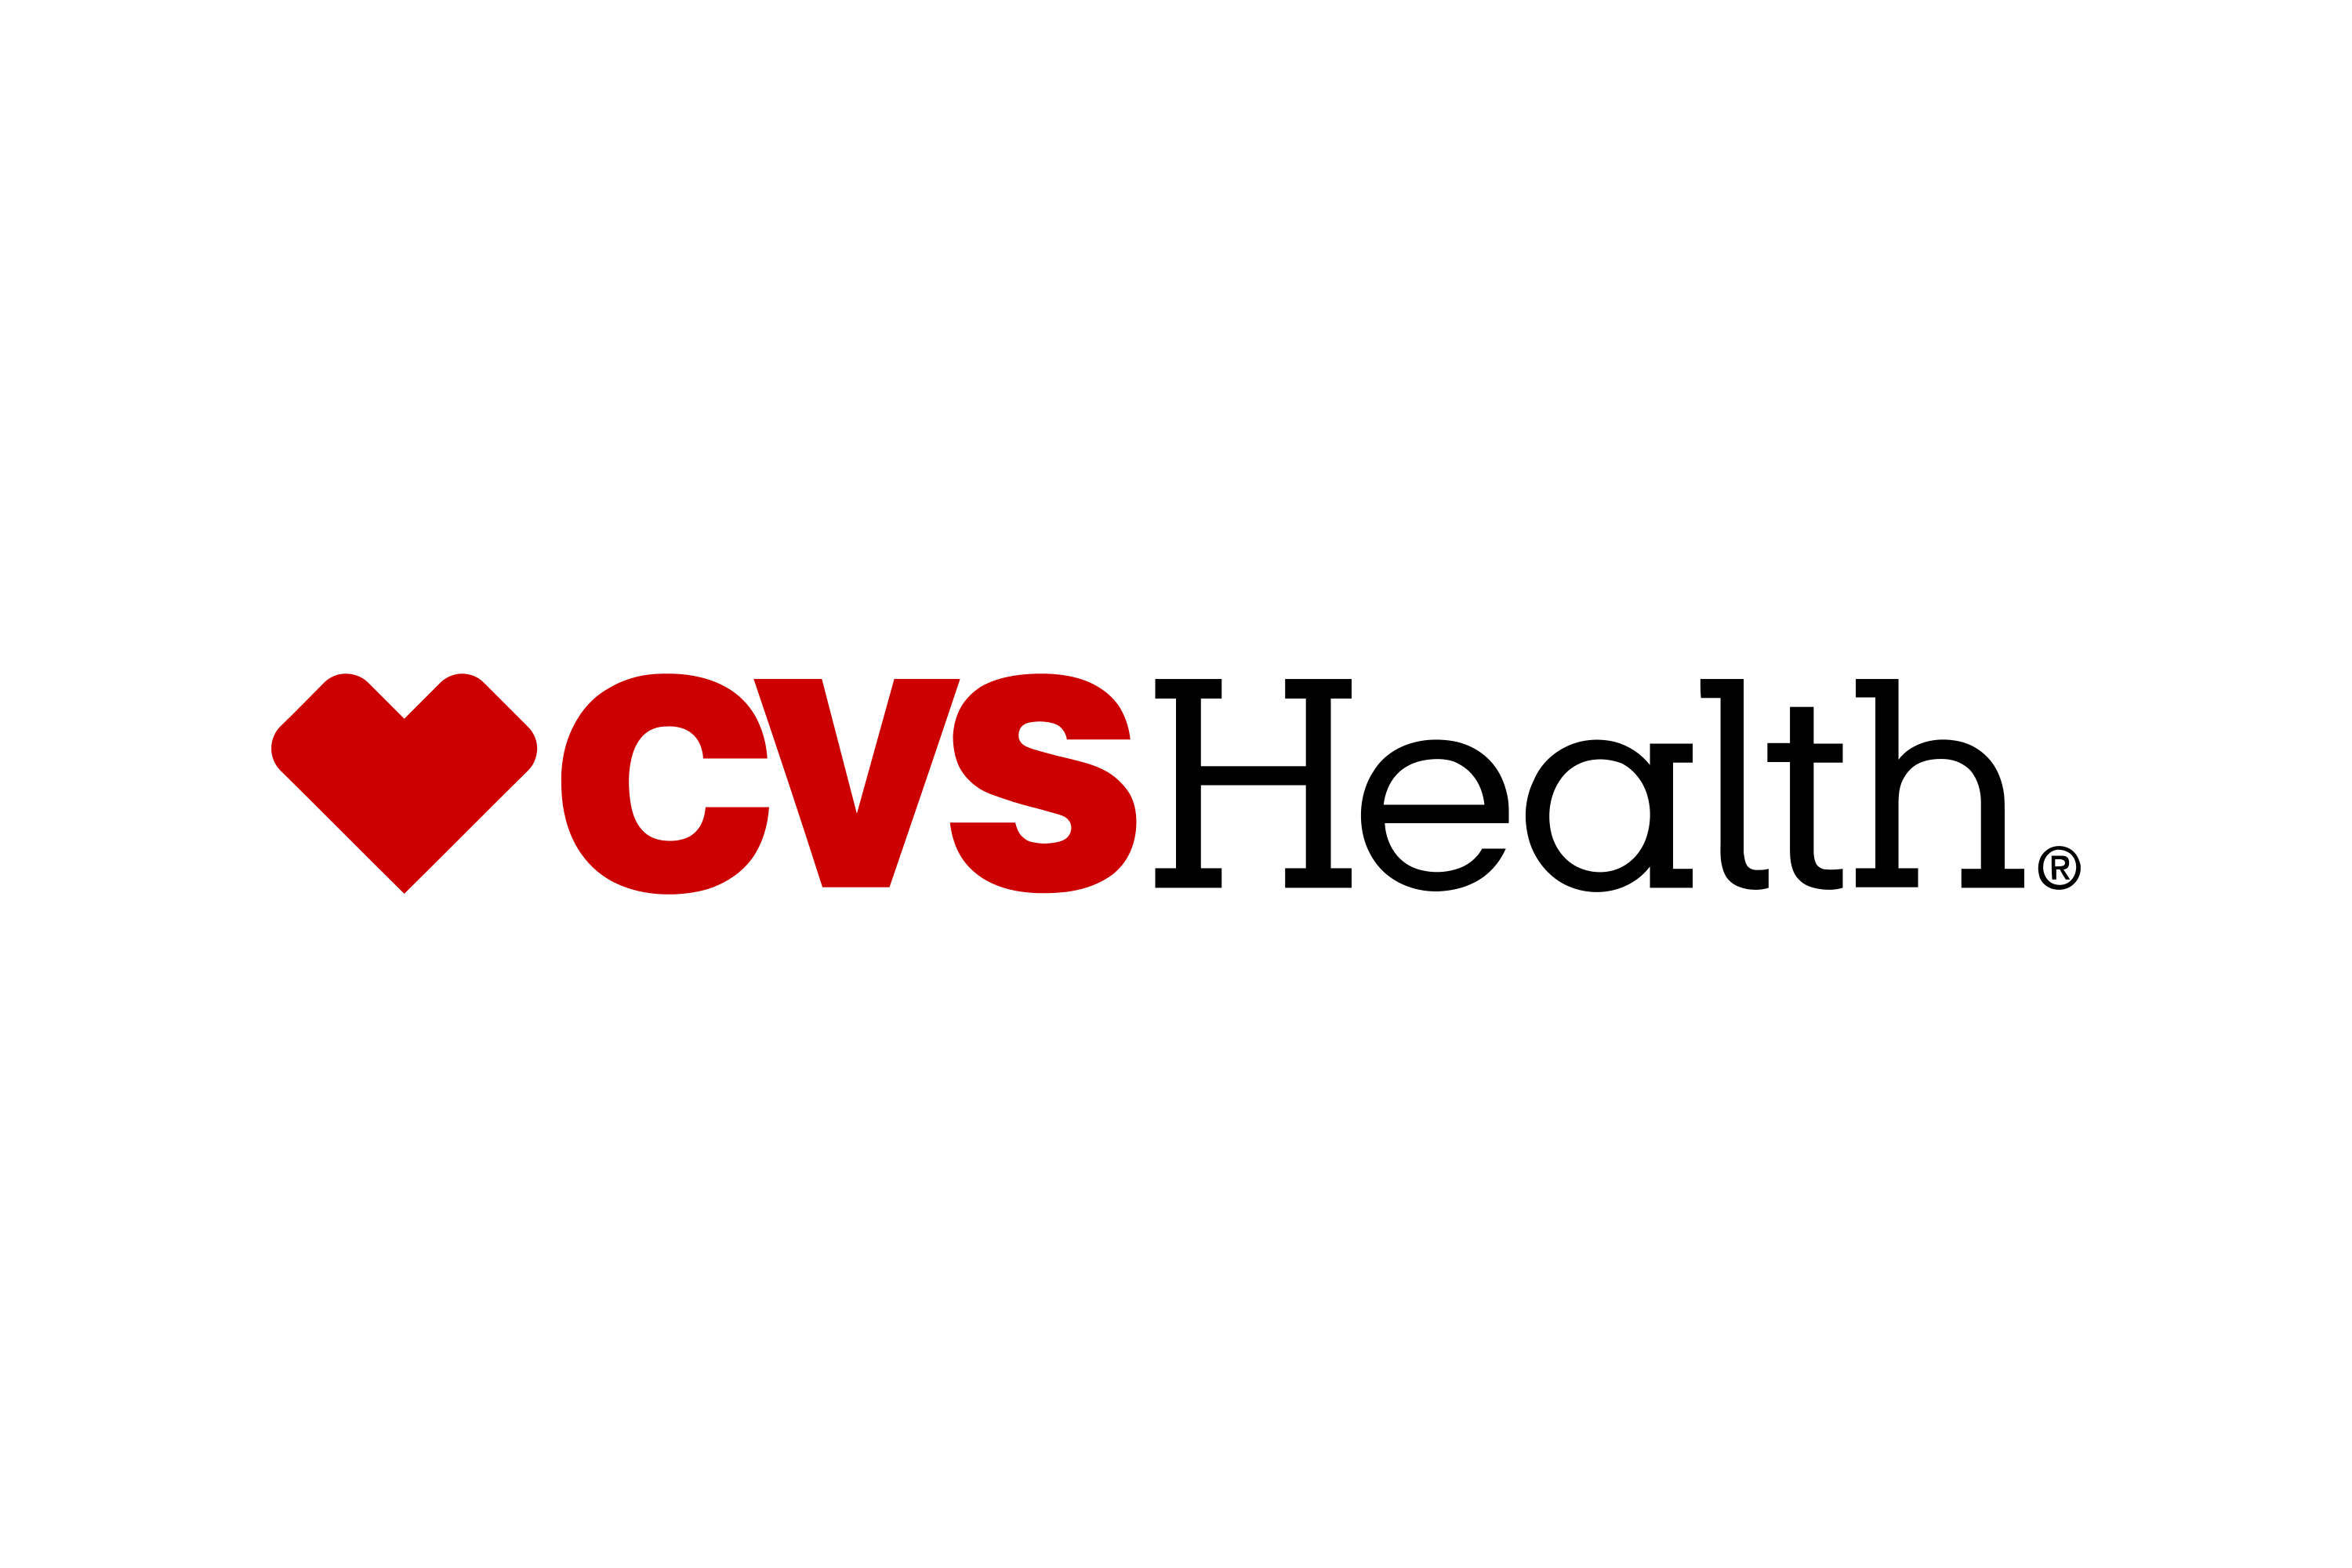 Cvs health letterhead ipad vpn juniper network connect